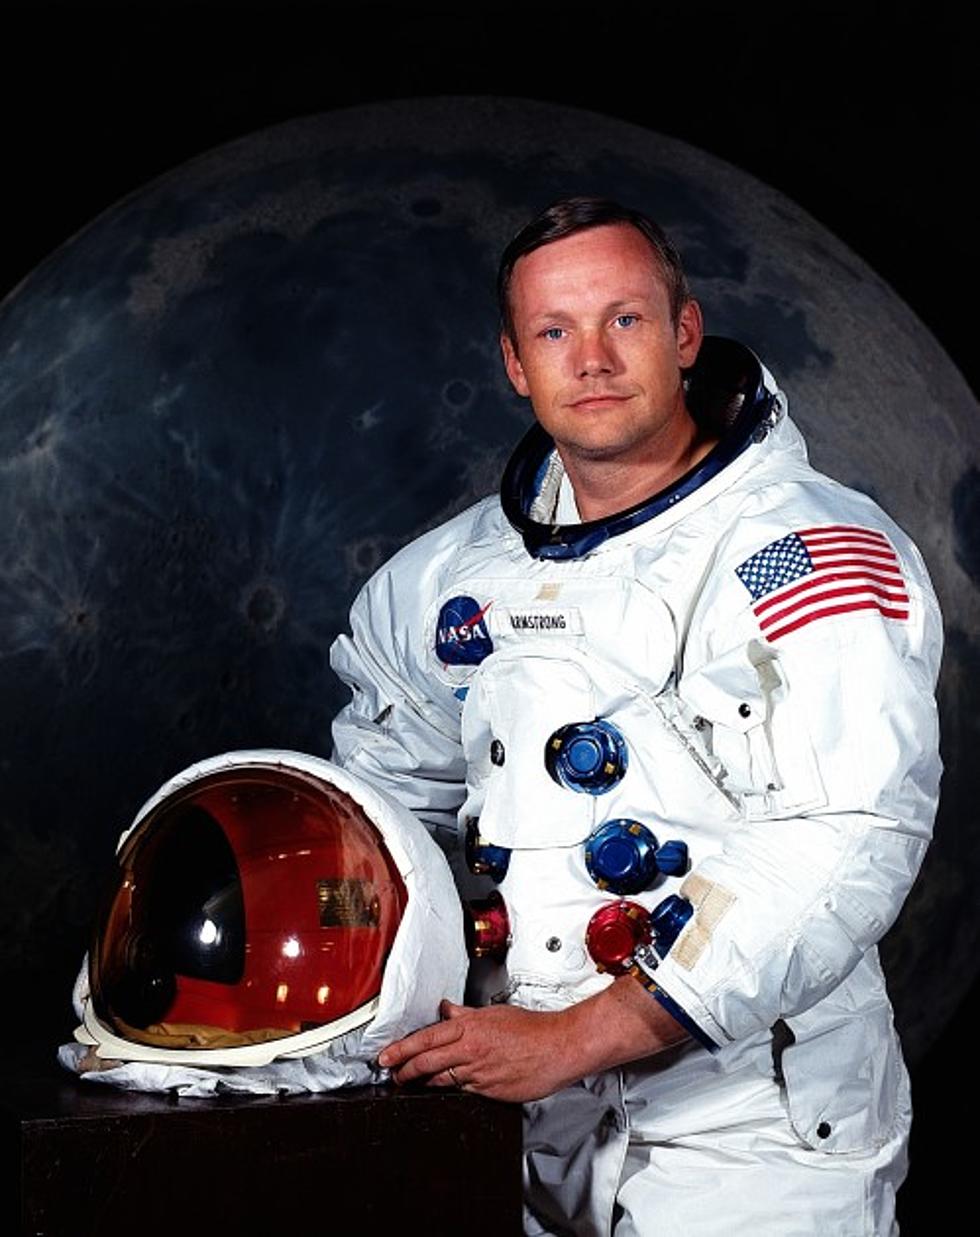 Neil Armstrong Spacesuit Fund Raiser With Kickstarter